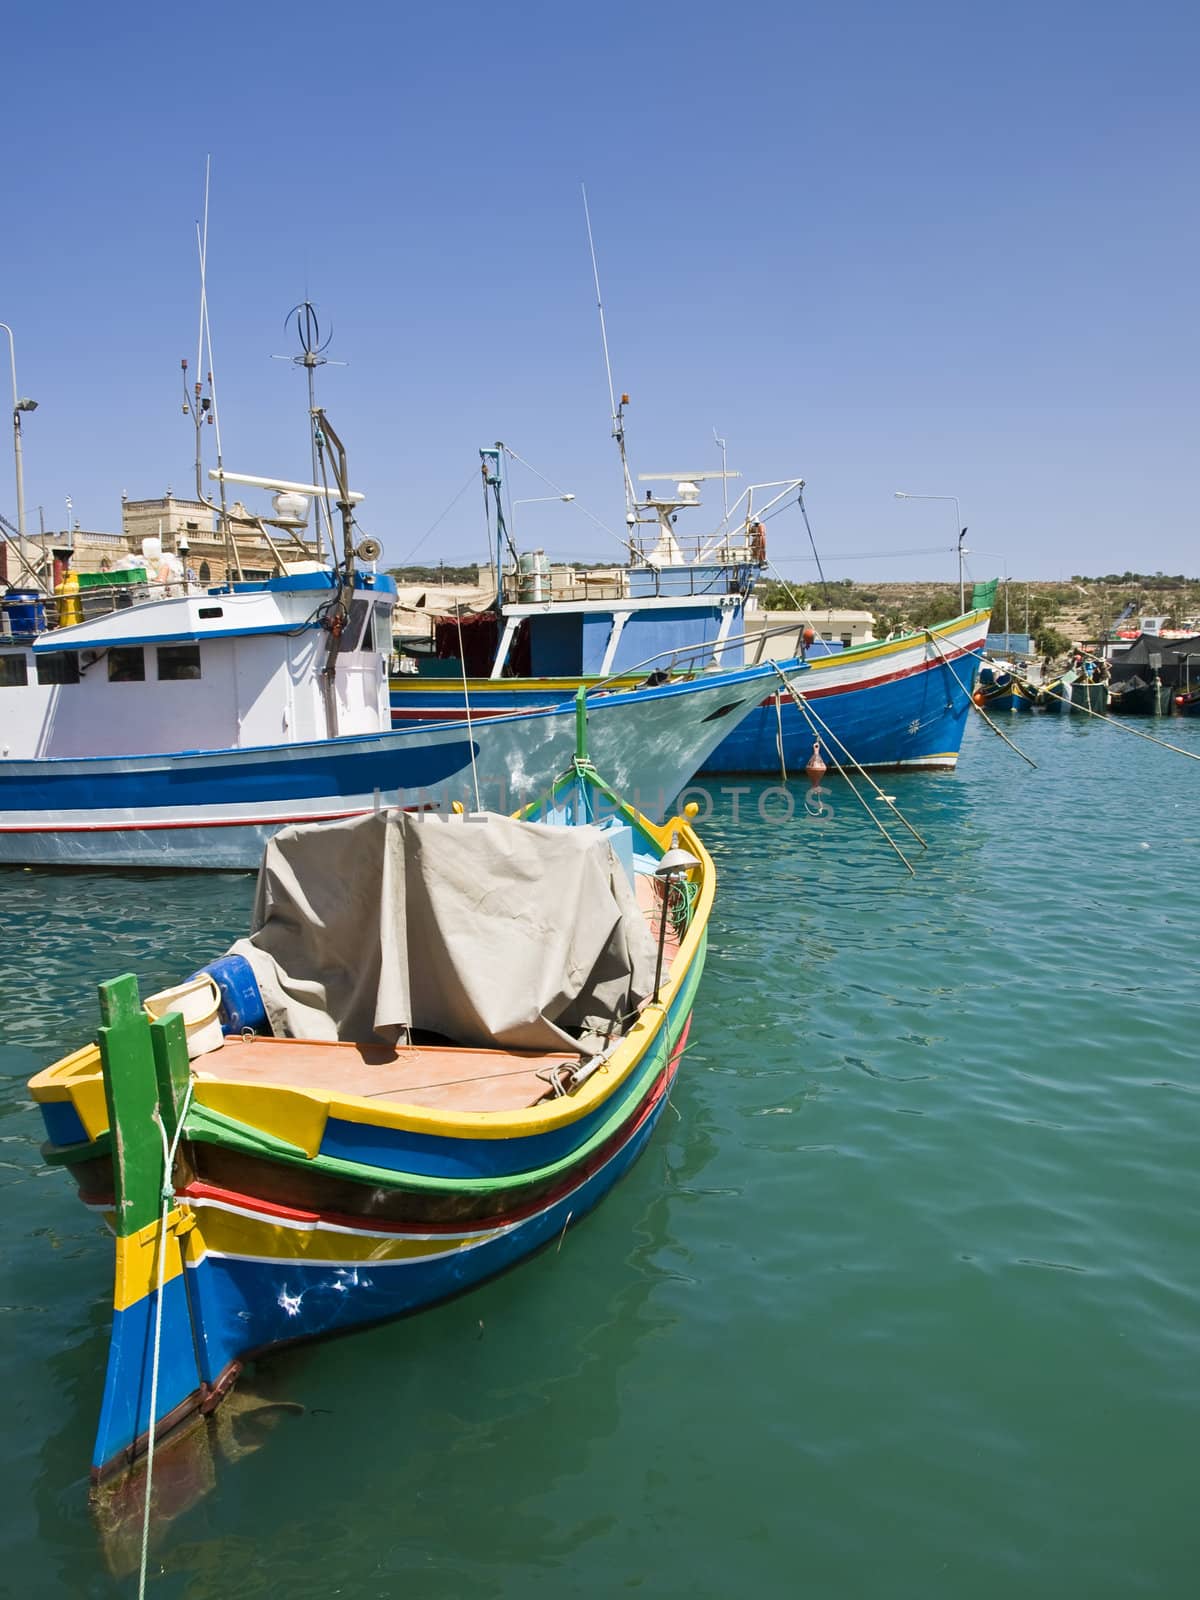 Malta Fishing Village by PhotoWorks